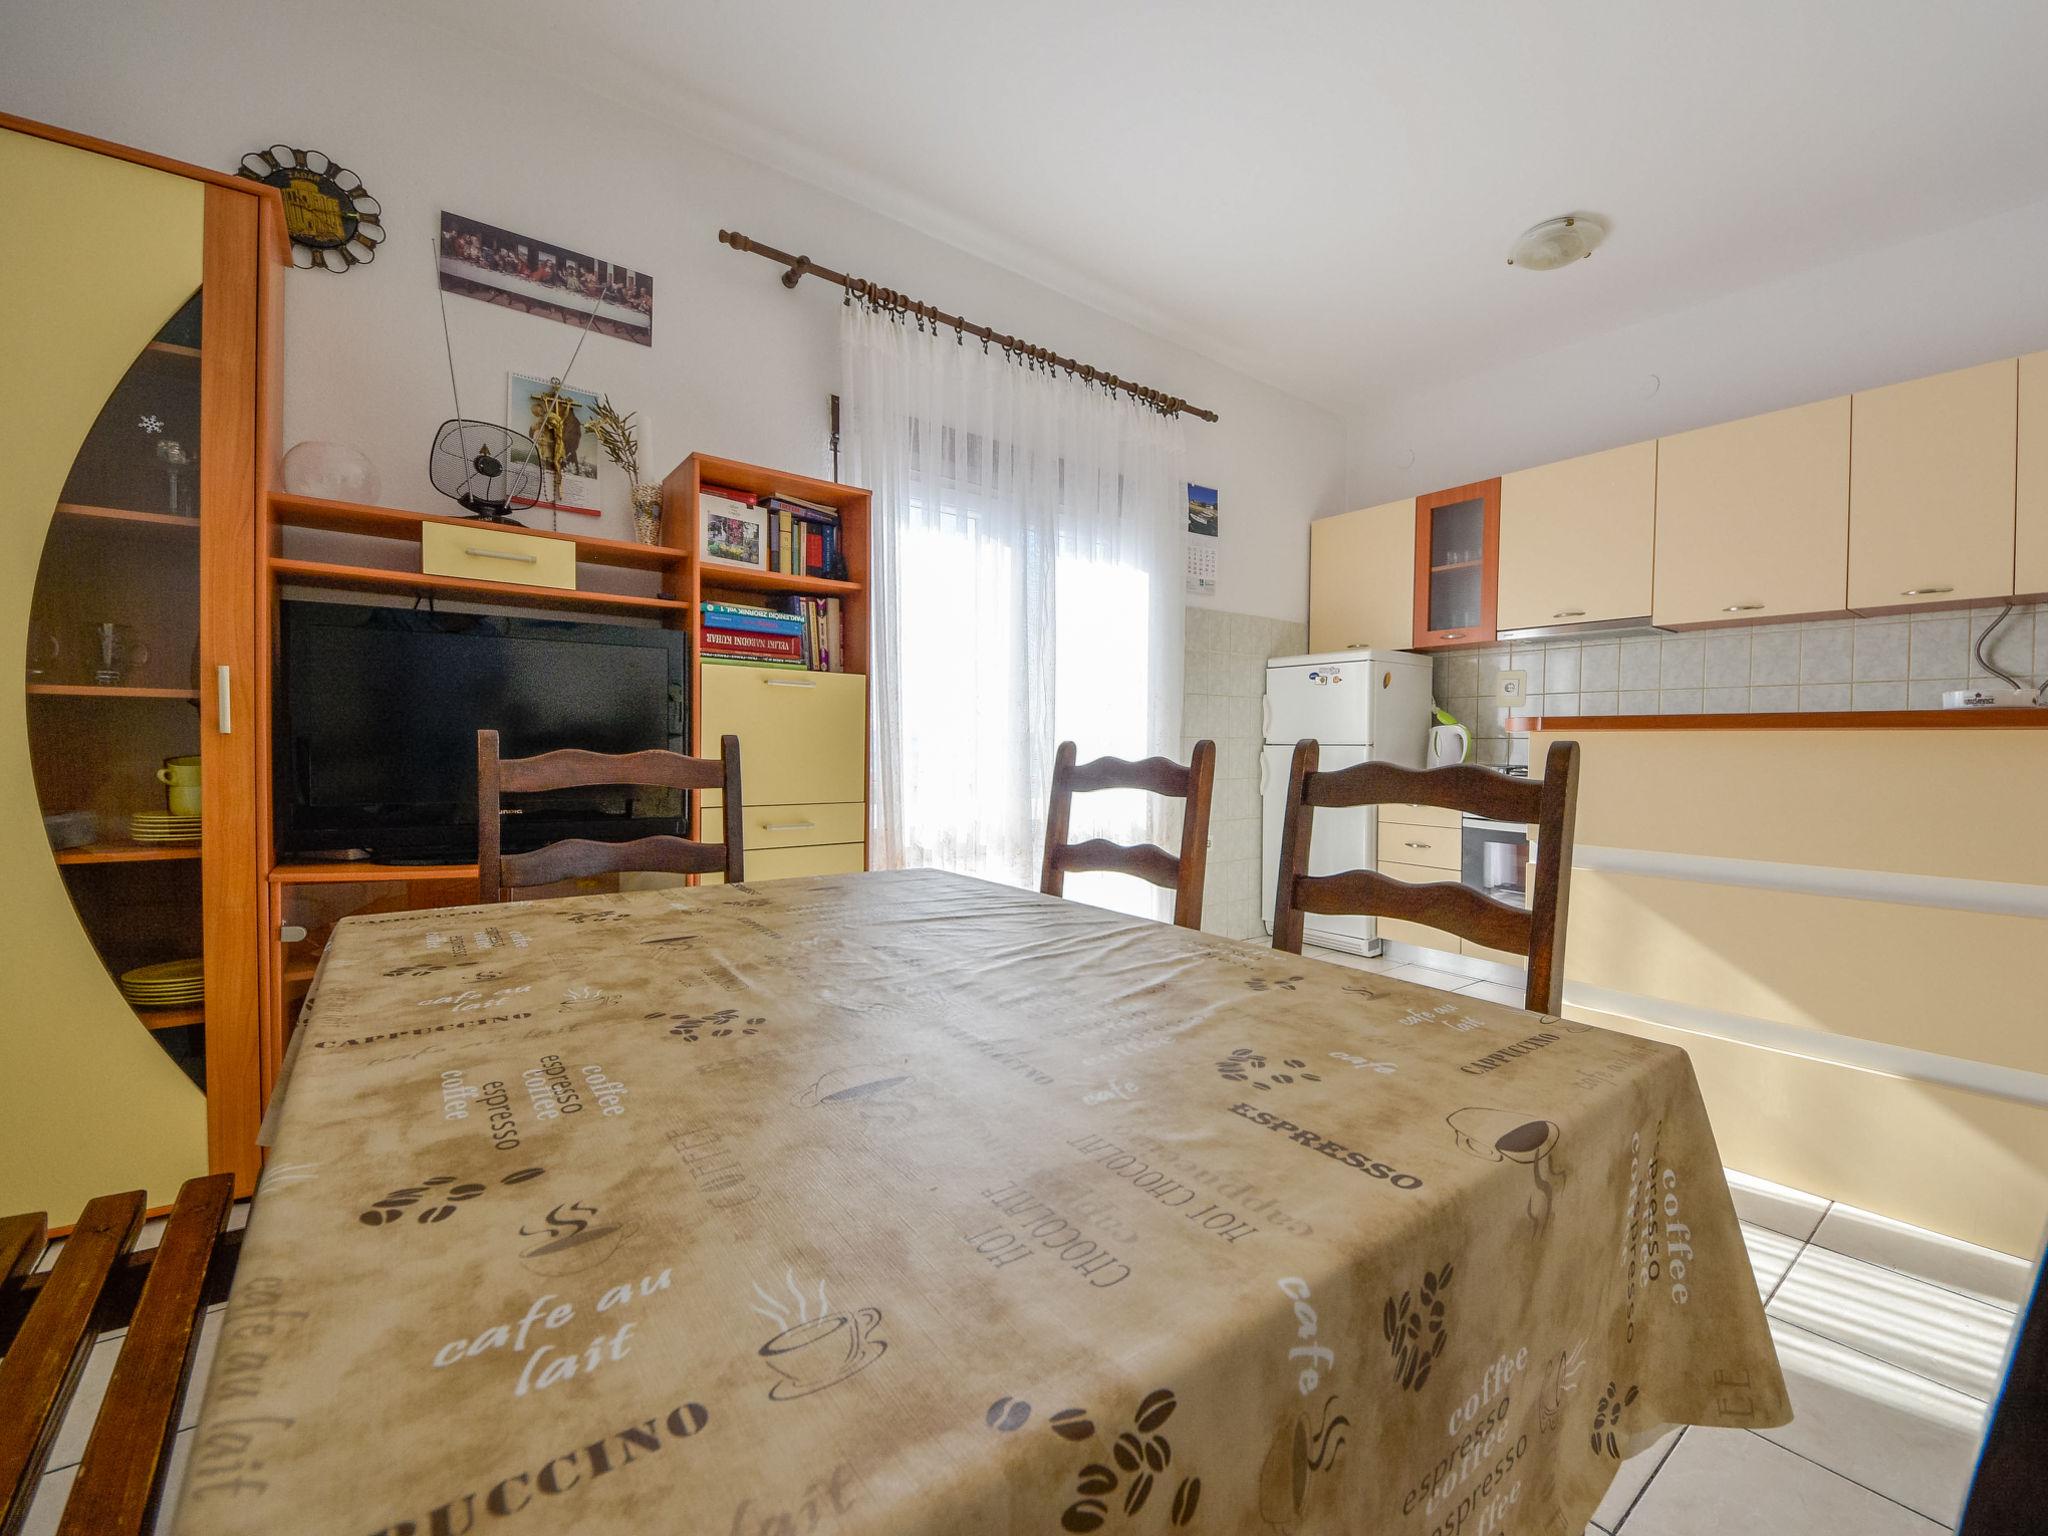 Photo 5 - Appartement de 4 chambres à Starigrad avec vues à la mer